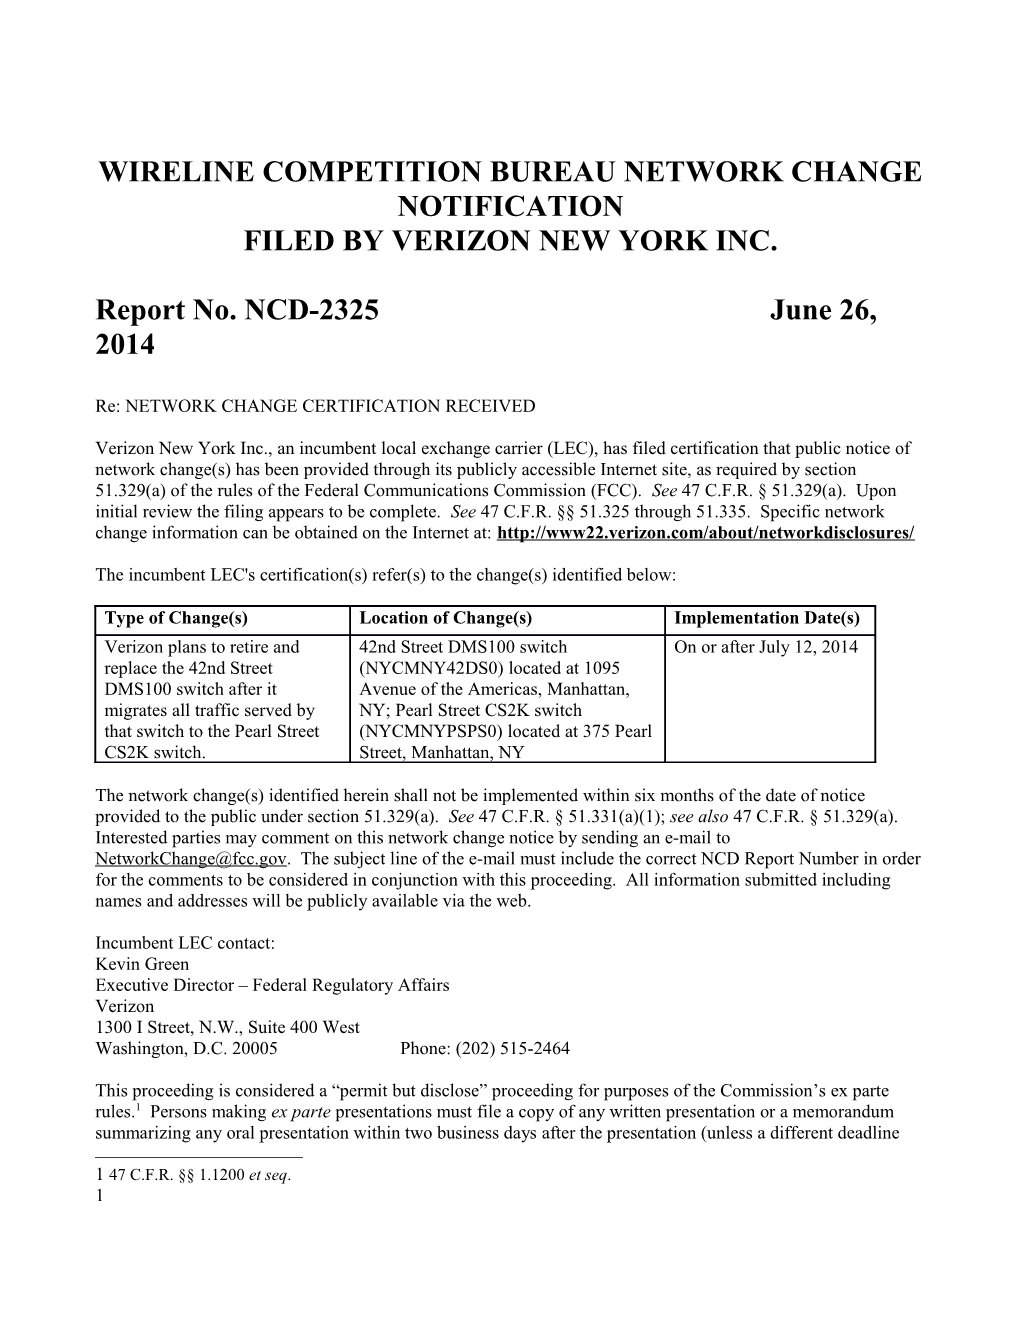 Wireline Competition Bureaunetwork Change Notification